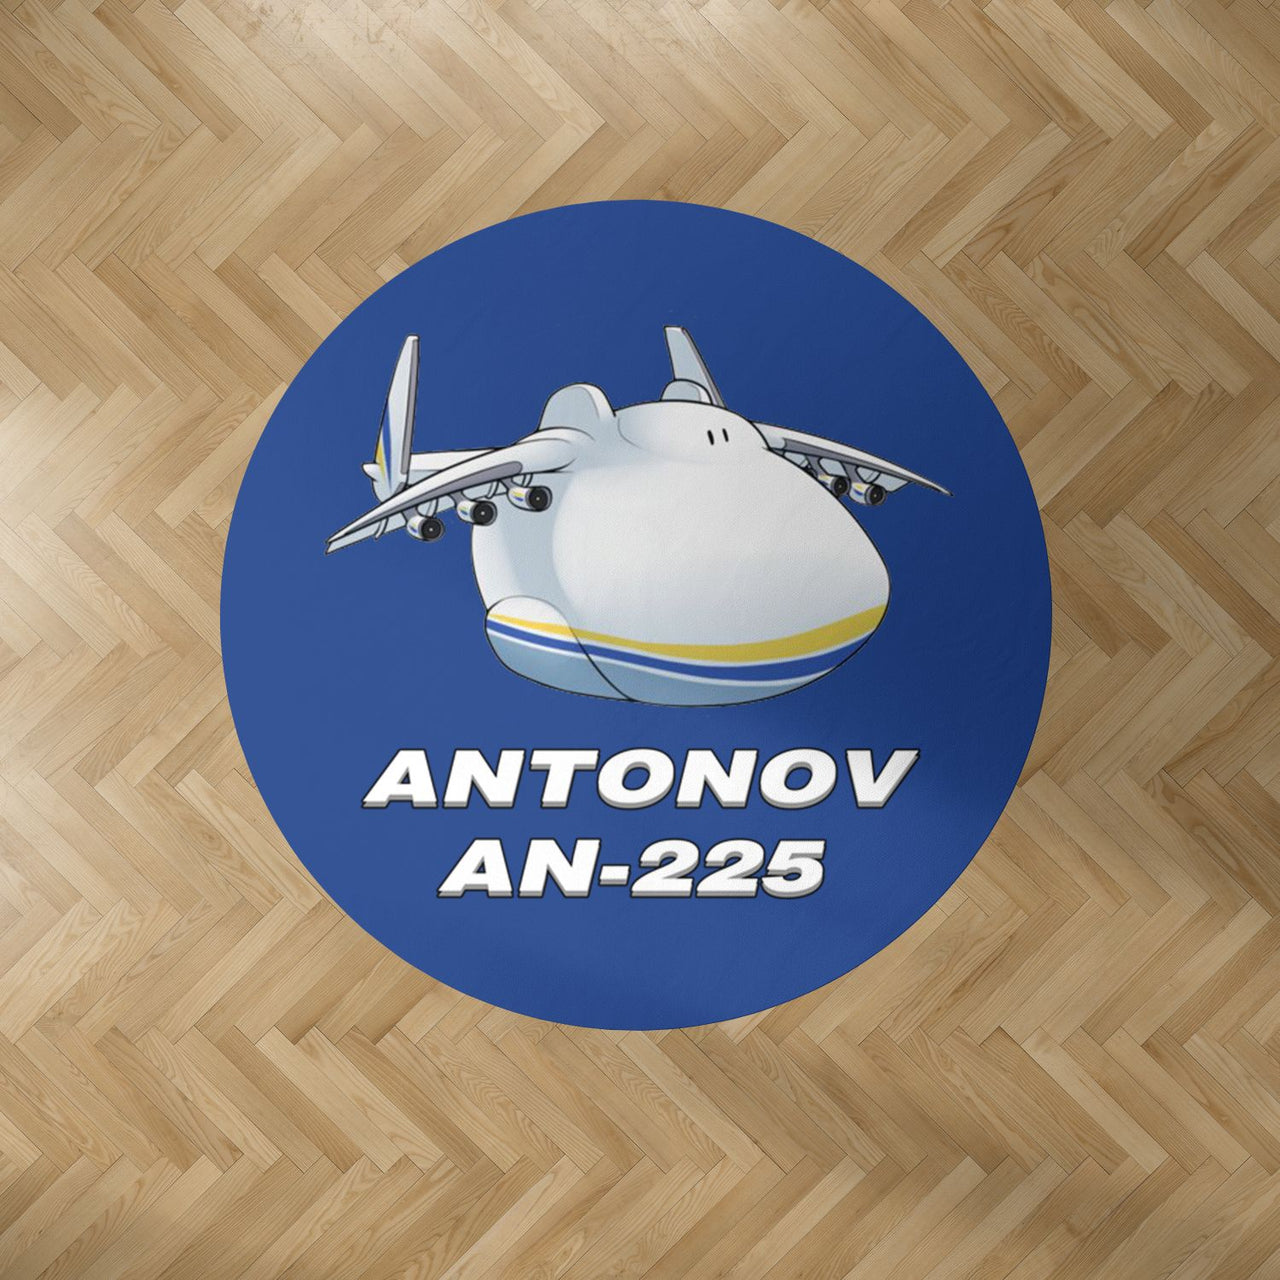 Antonov AN-225 (21) Designed Carpet & Floor Mats (Round)